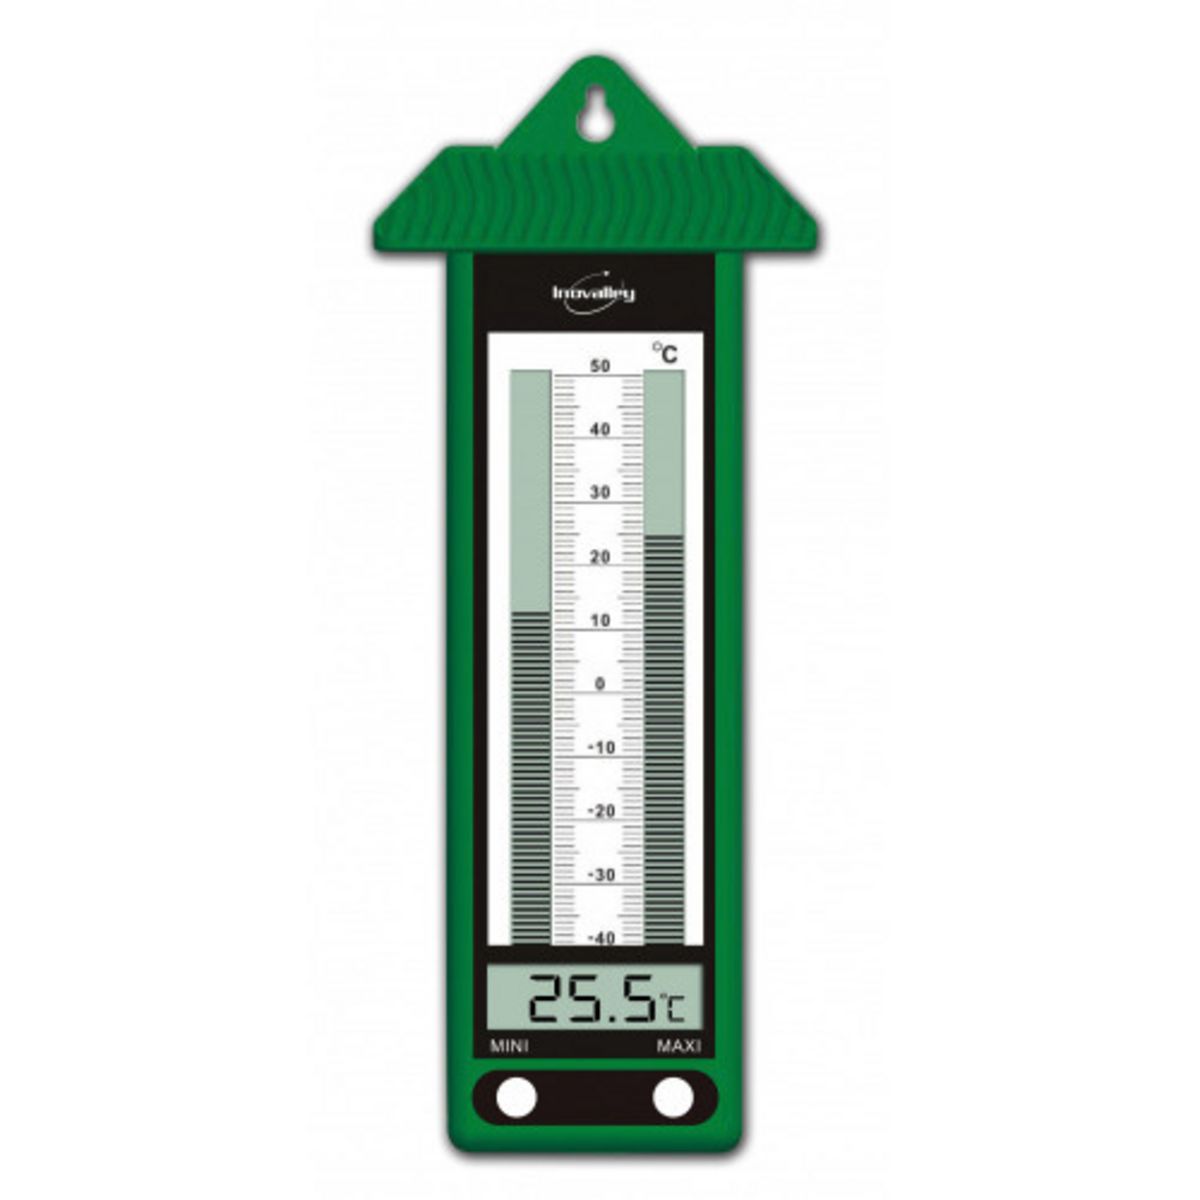 Inovalley Thermomètre électronique MINI MAXI vert